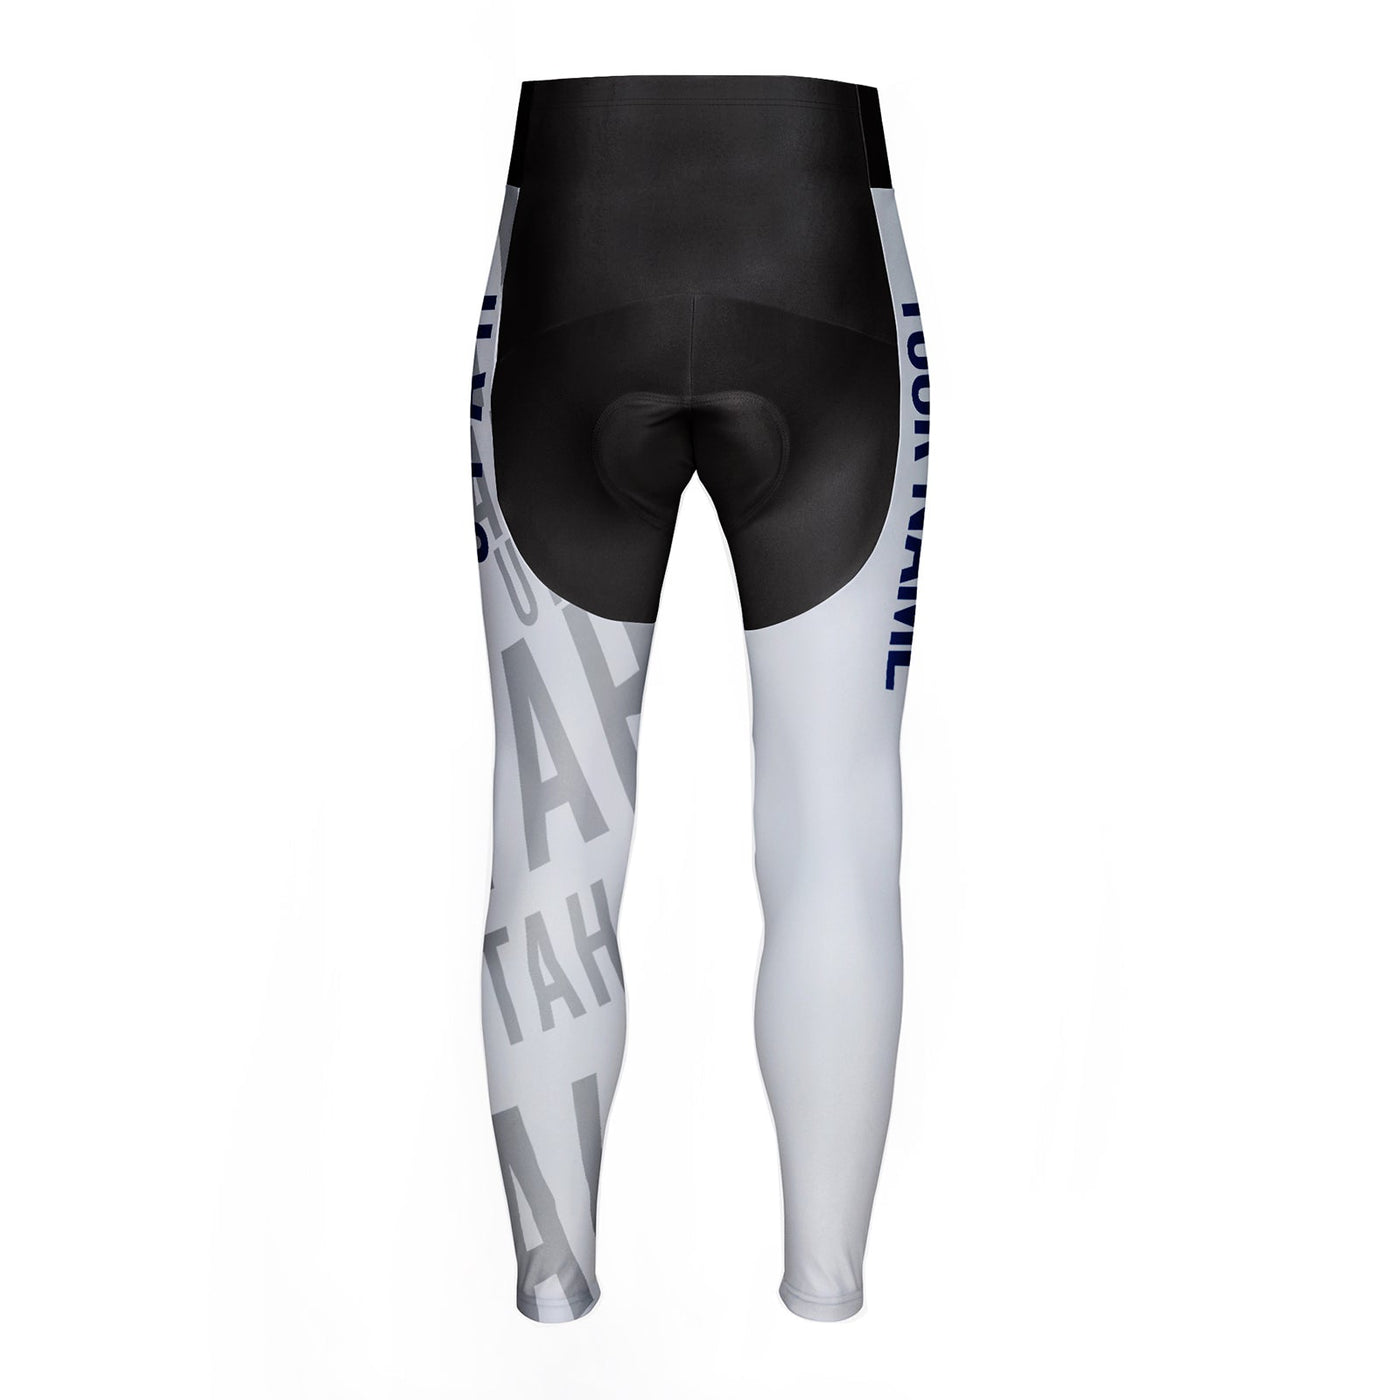 Customized Utah Unisex Thermal Fleece Cycling Tights Long Pants